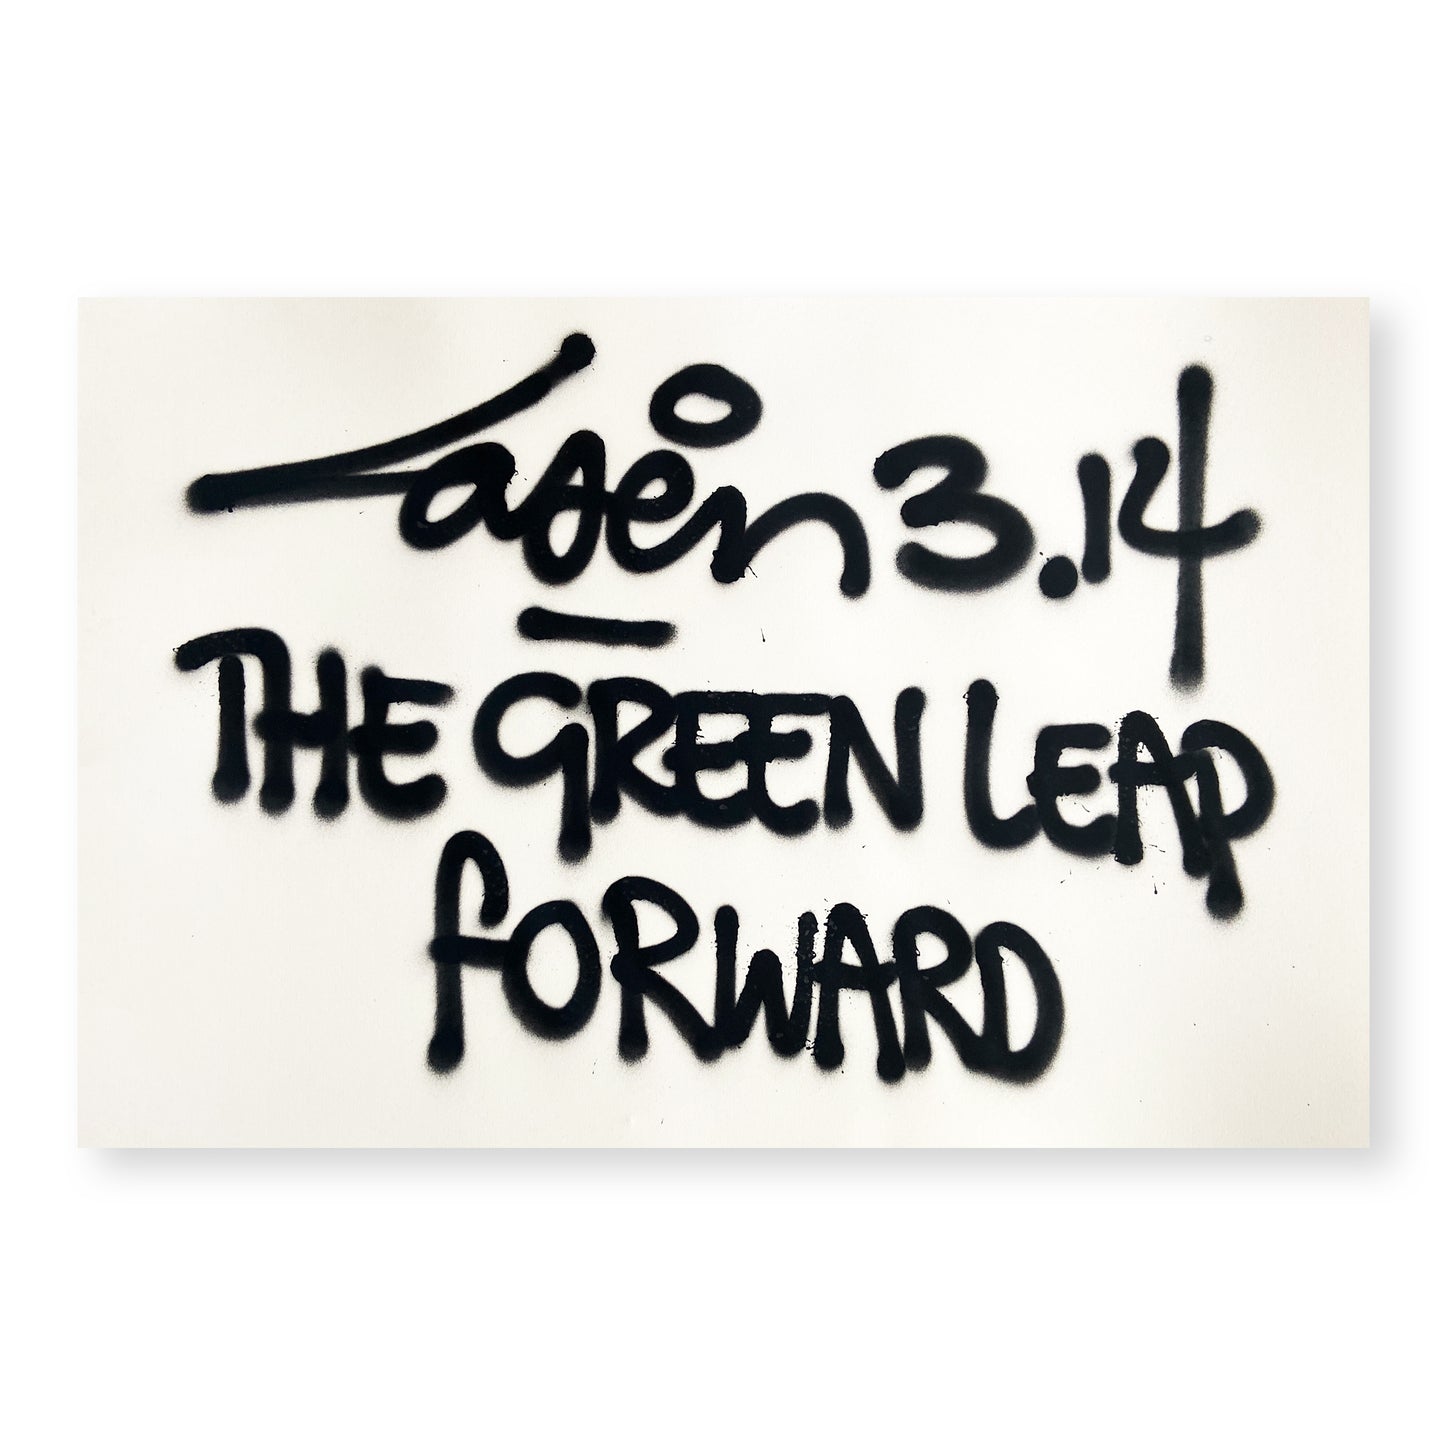 The Green Leap Forward